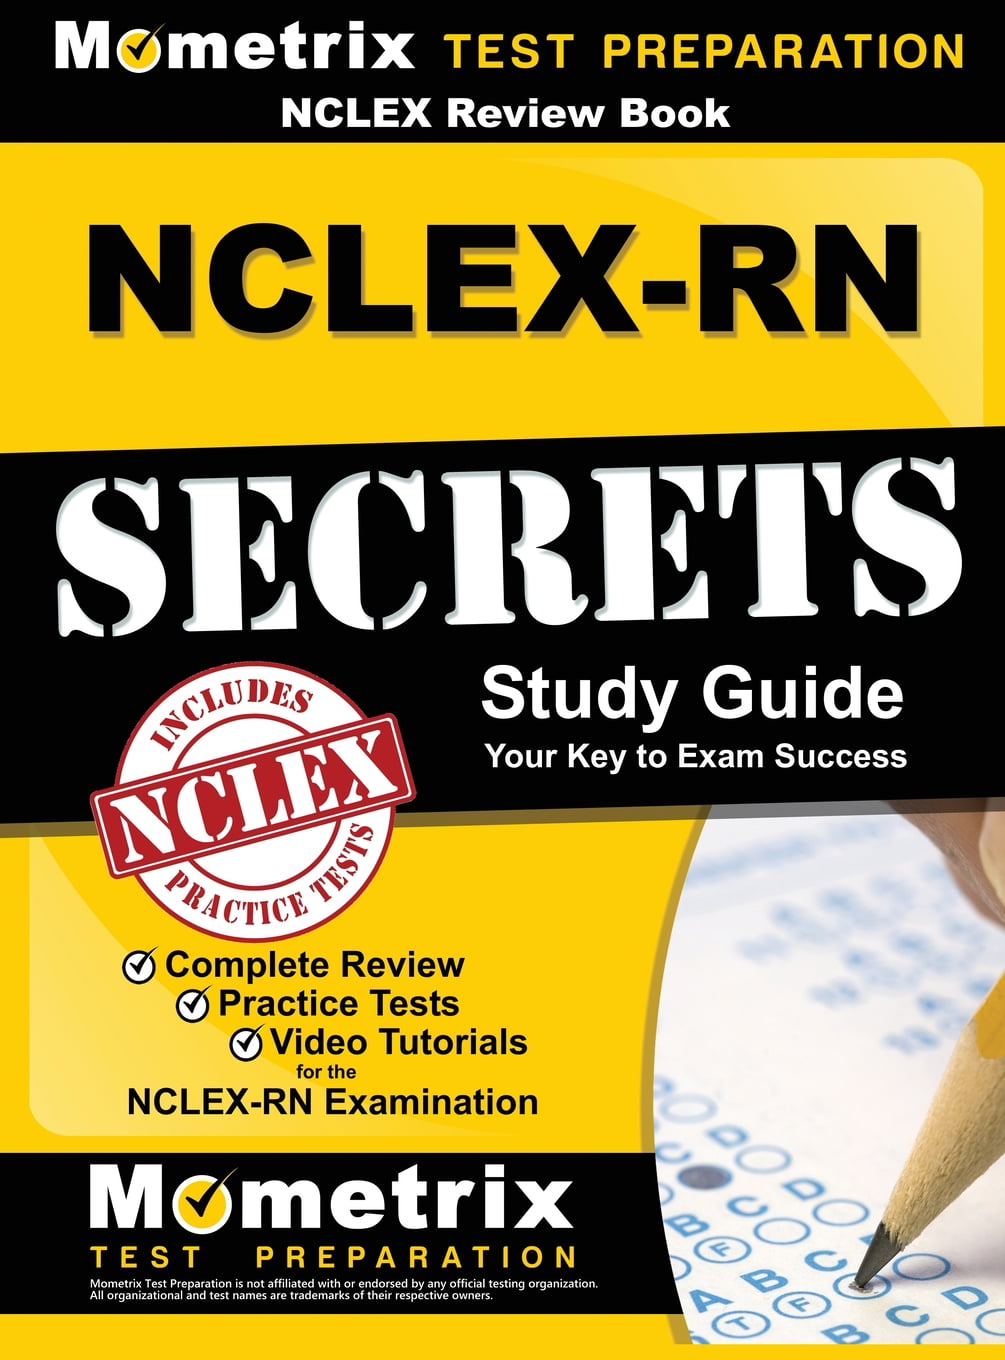 NCLEX Review Book NCLEXRN Secrets Study Guide Complete Review